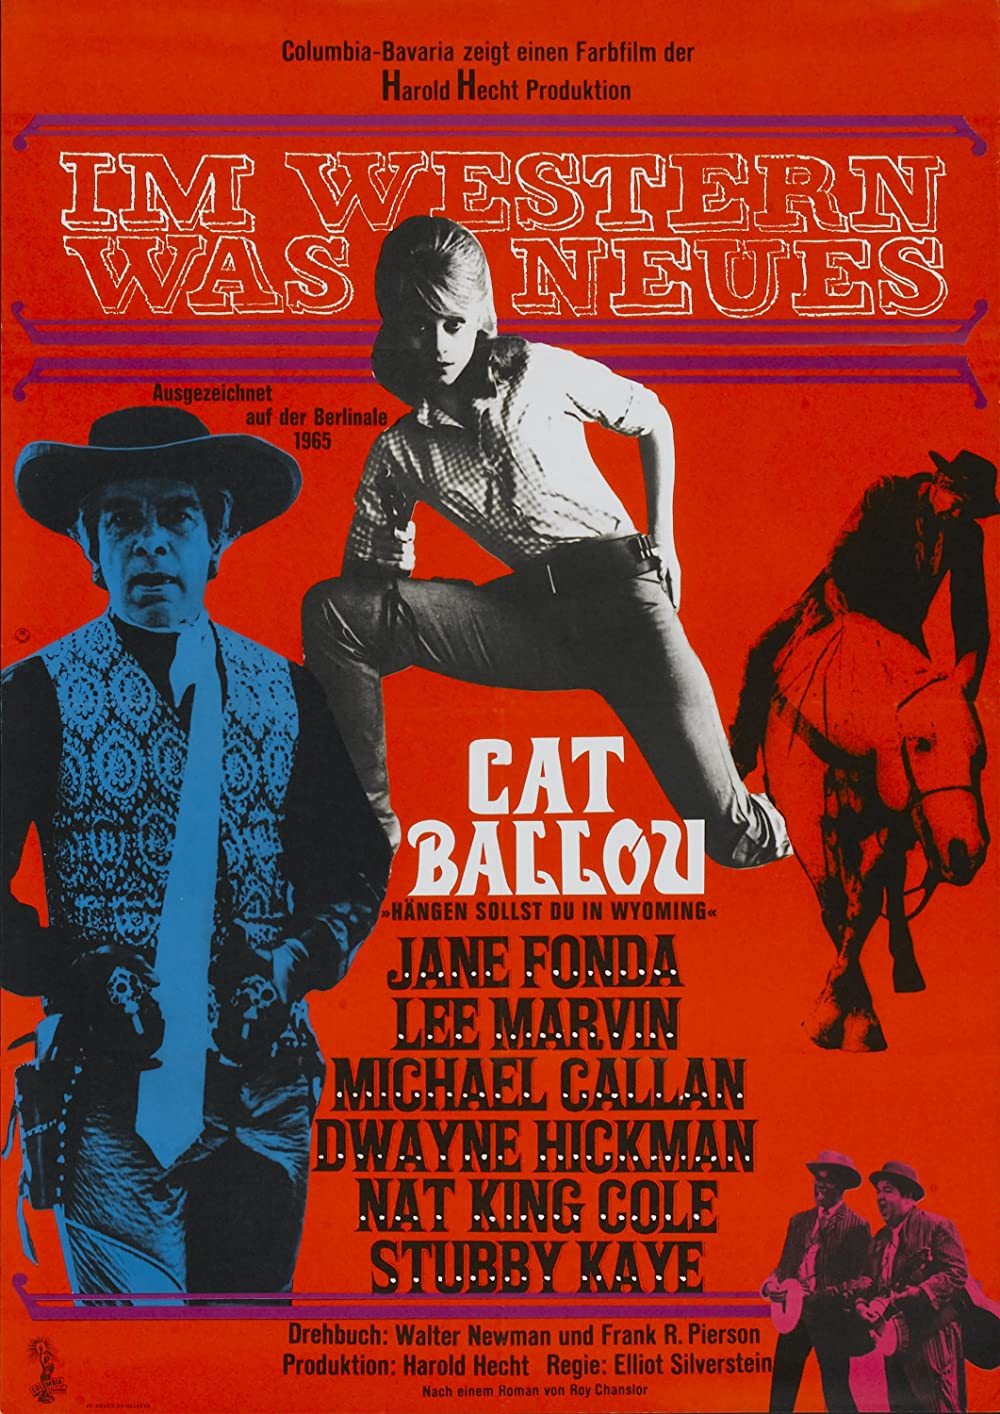 Filmbeschreibung zu Cat Ballou - Hängen sollst du in Wyoming